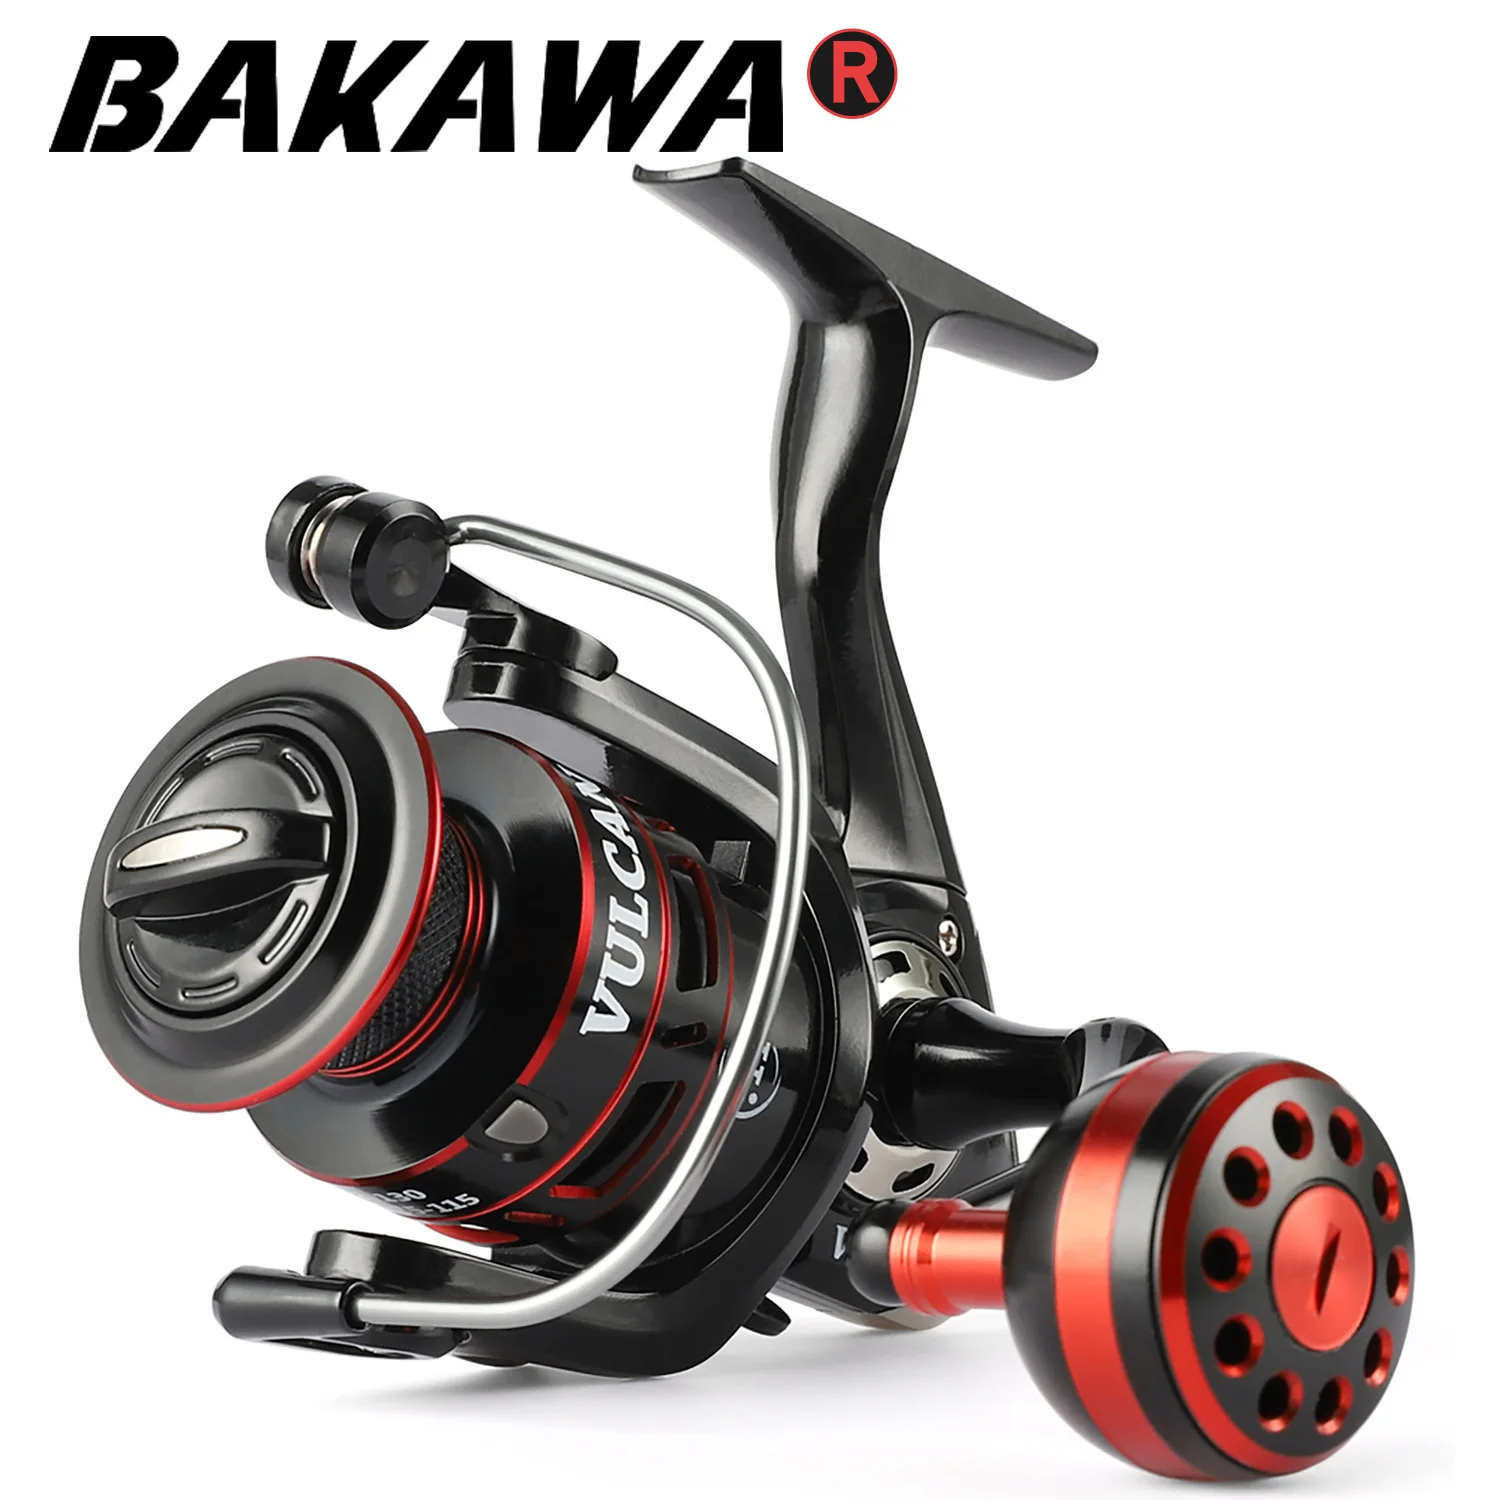 

BAKAWA Spinning Fishing Reel 1000-7000 Pesca 5.2:1 Gear Ratio 10kg Power Metal Spool Sea Saltwater Carp Tackles VC Series